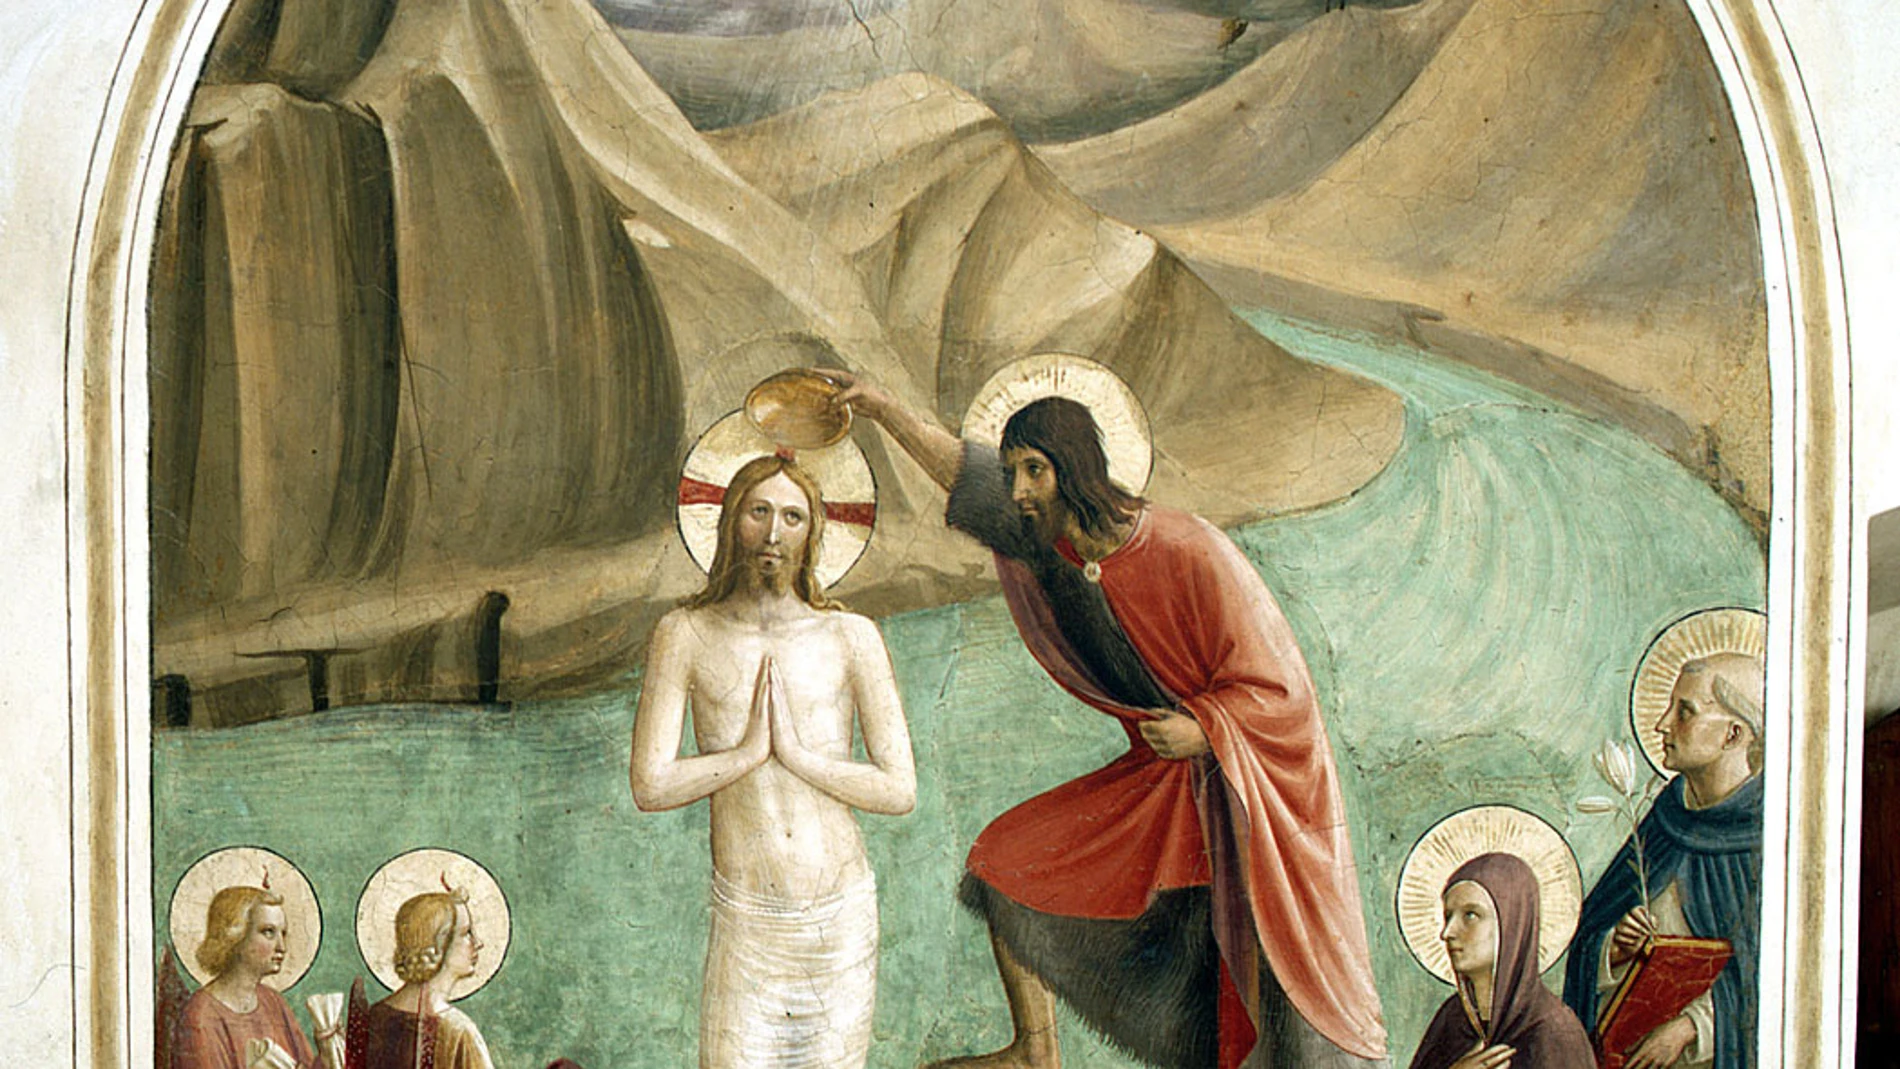 Fresco de Fray Angélico, "Il battesimo di Cristo", en el monasterio de San Marco, Florencia